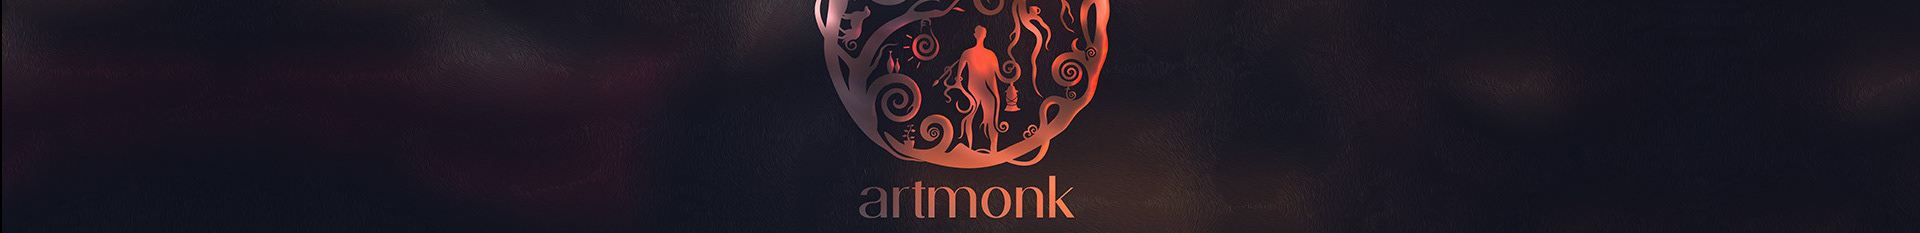 Banner de perfil de Artmonk Designs